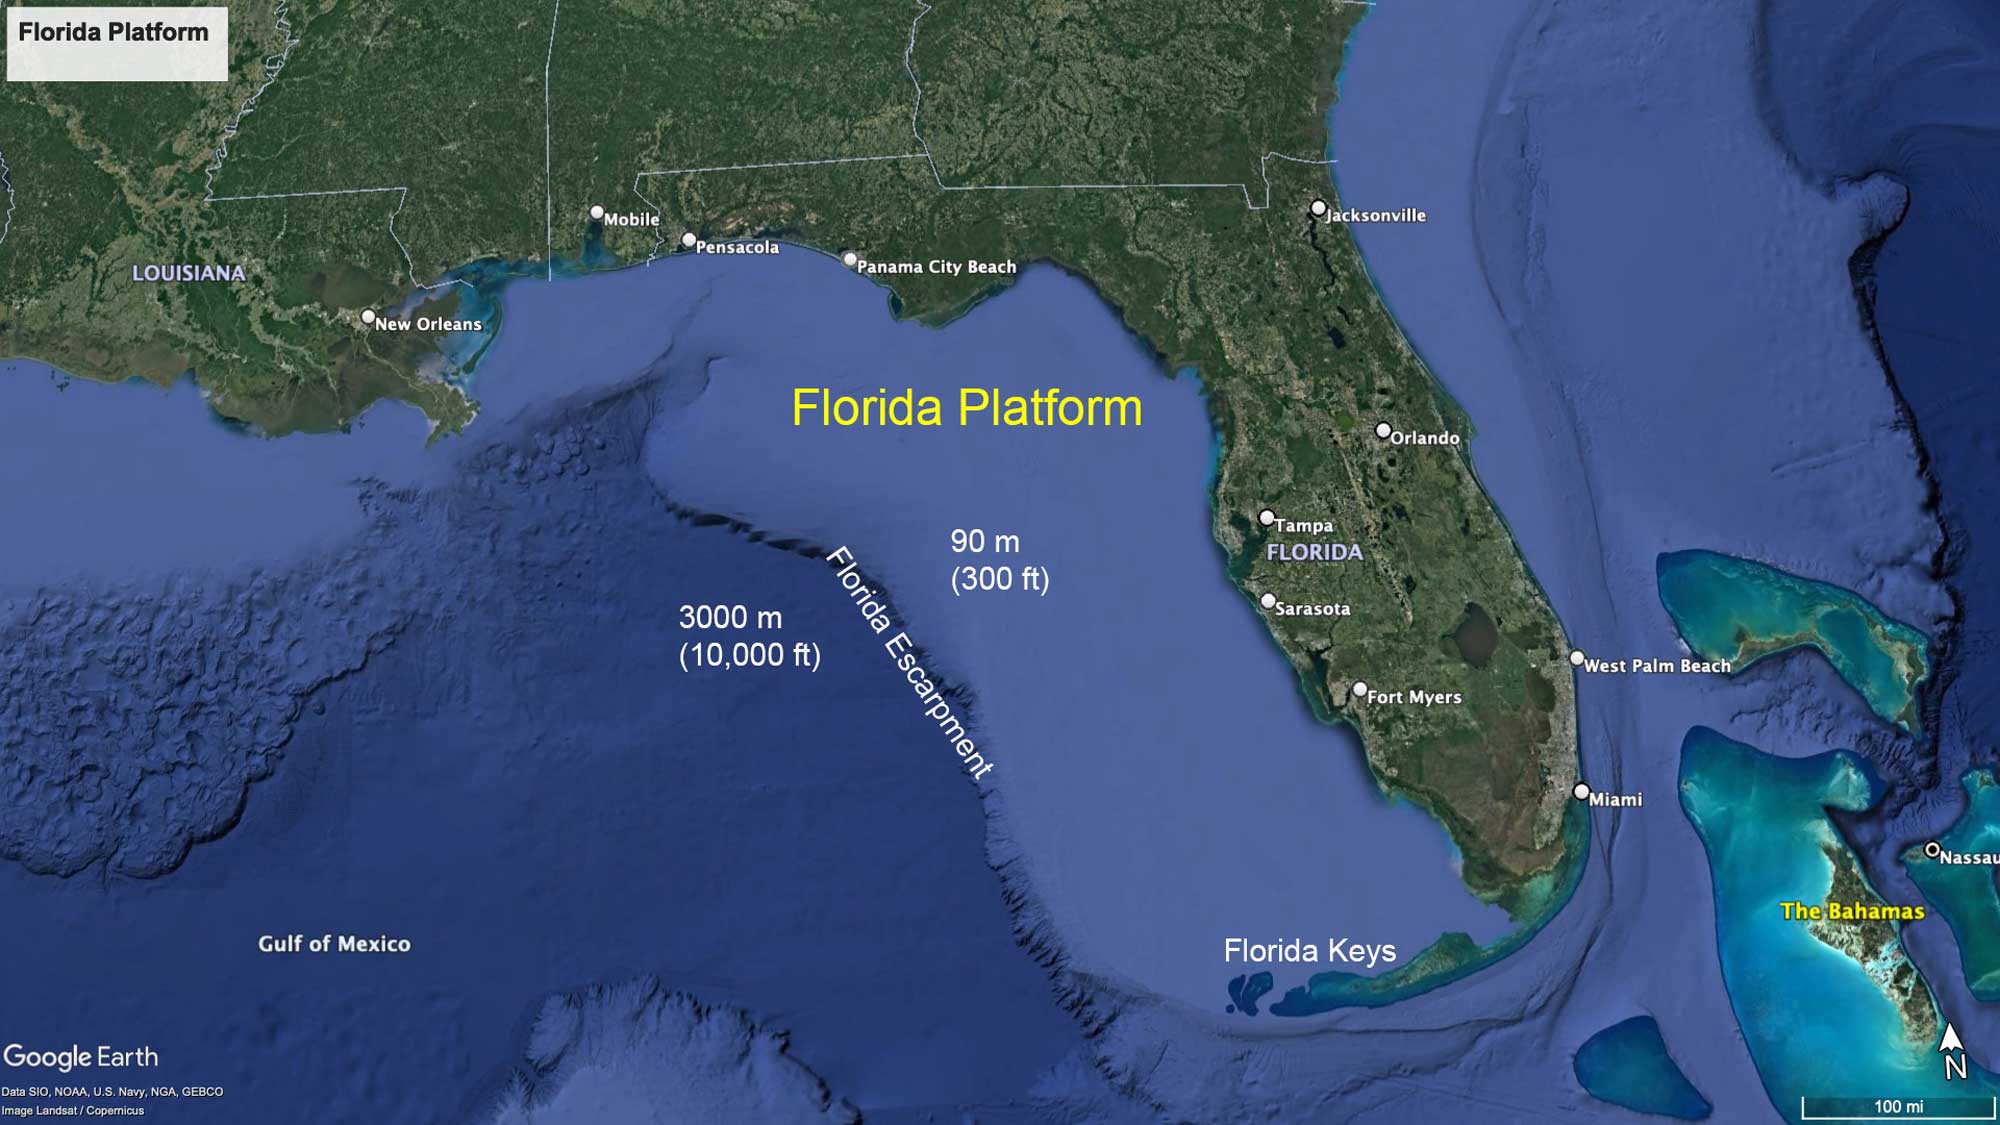 Google Earth map of the Florida Platform.